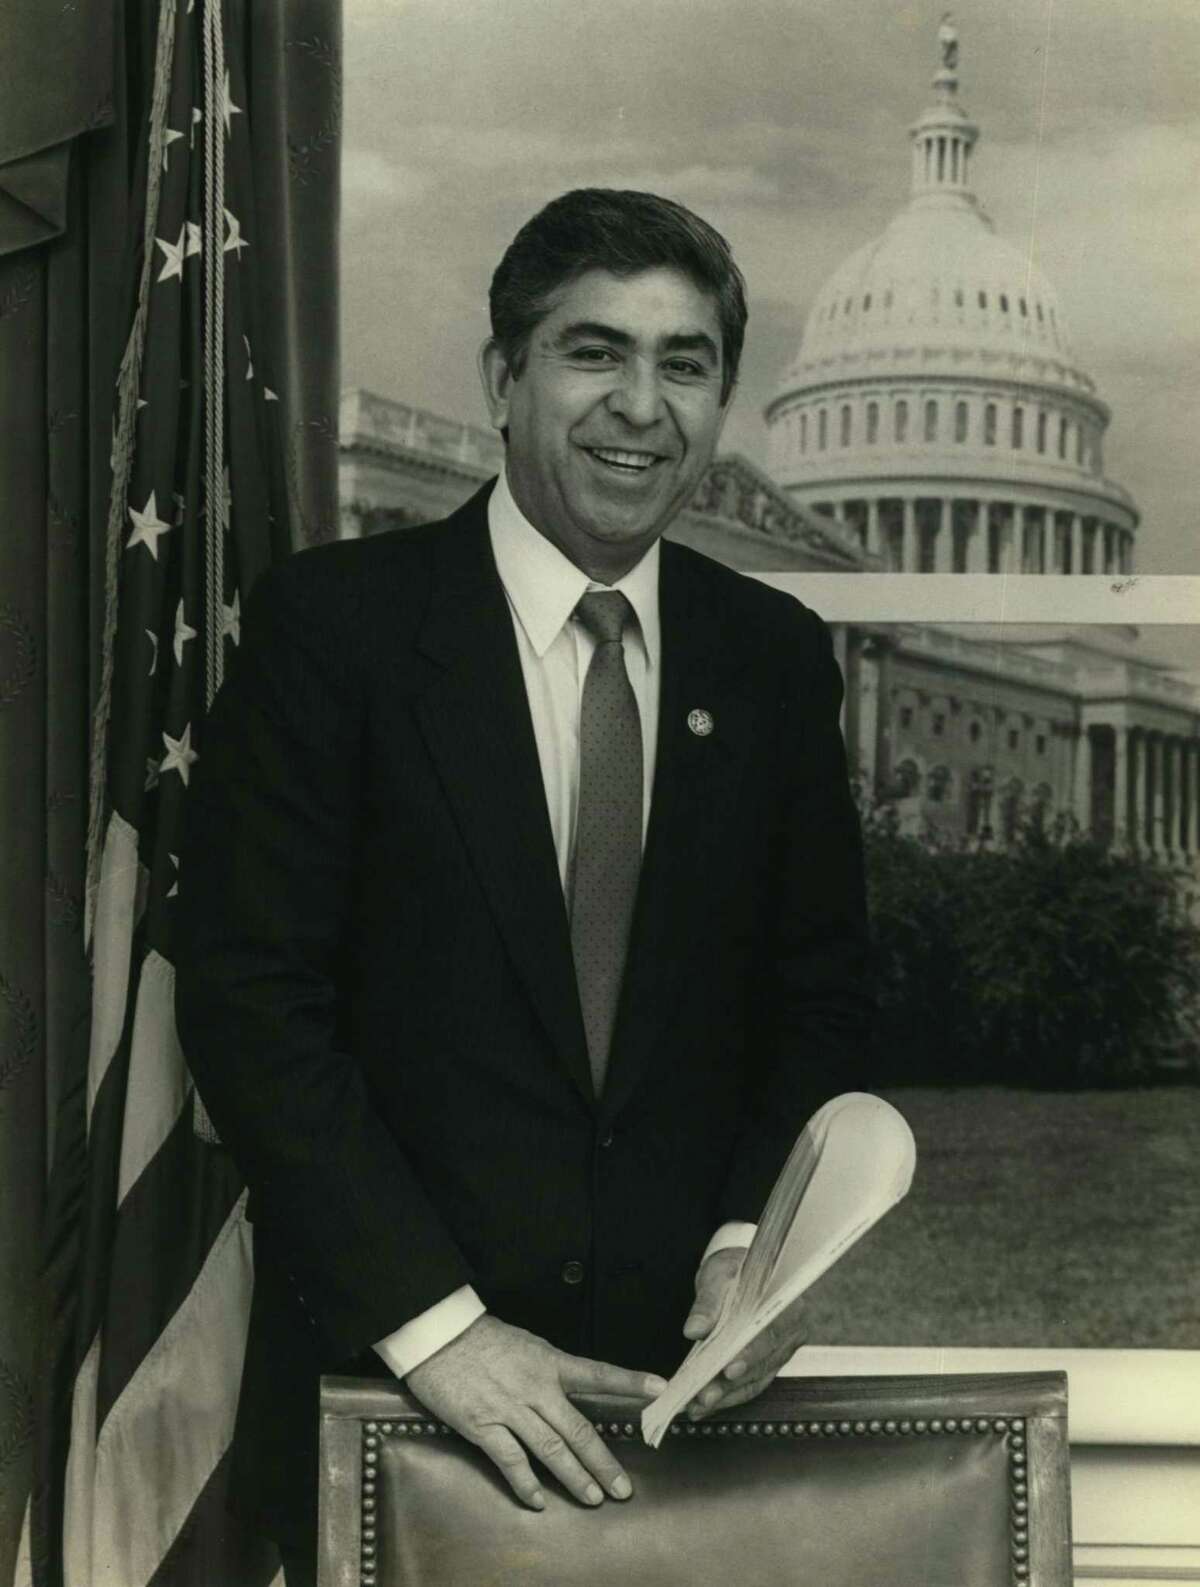 Albert Bustamante in a congressional portrait.